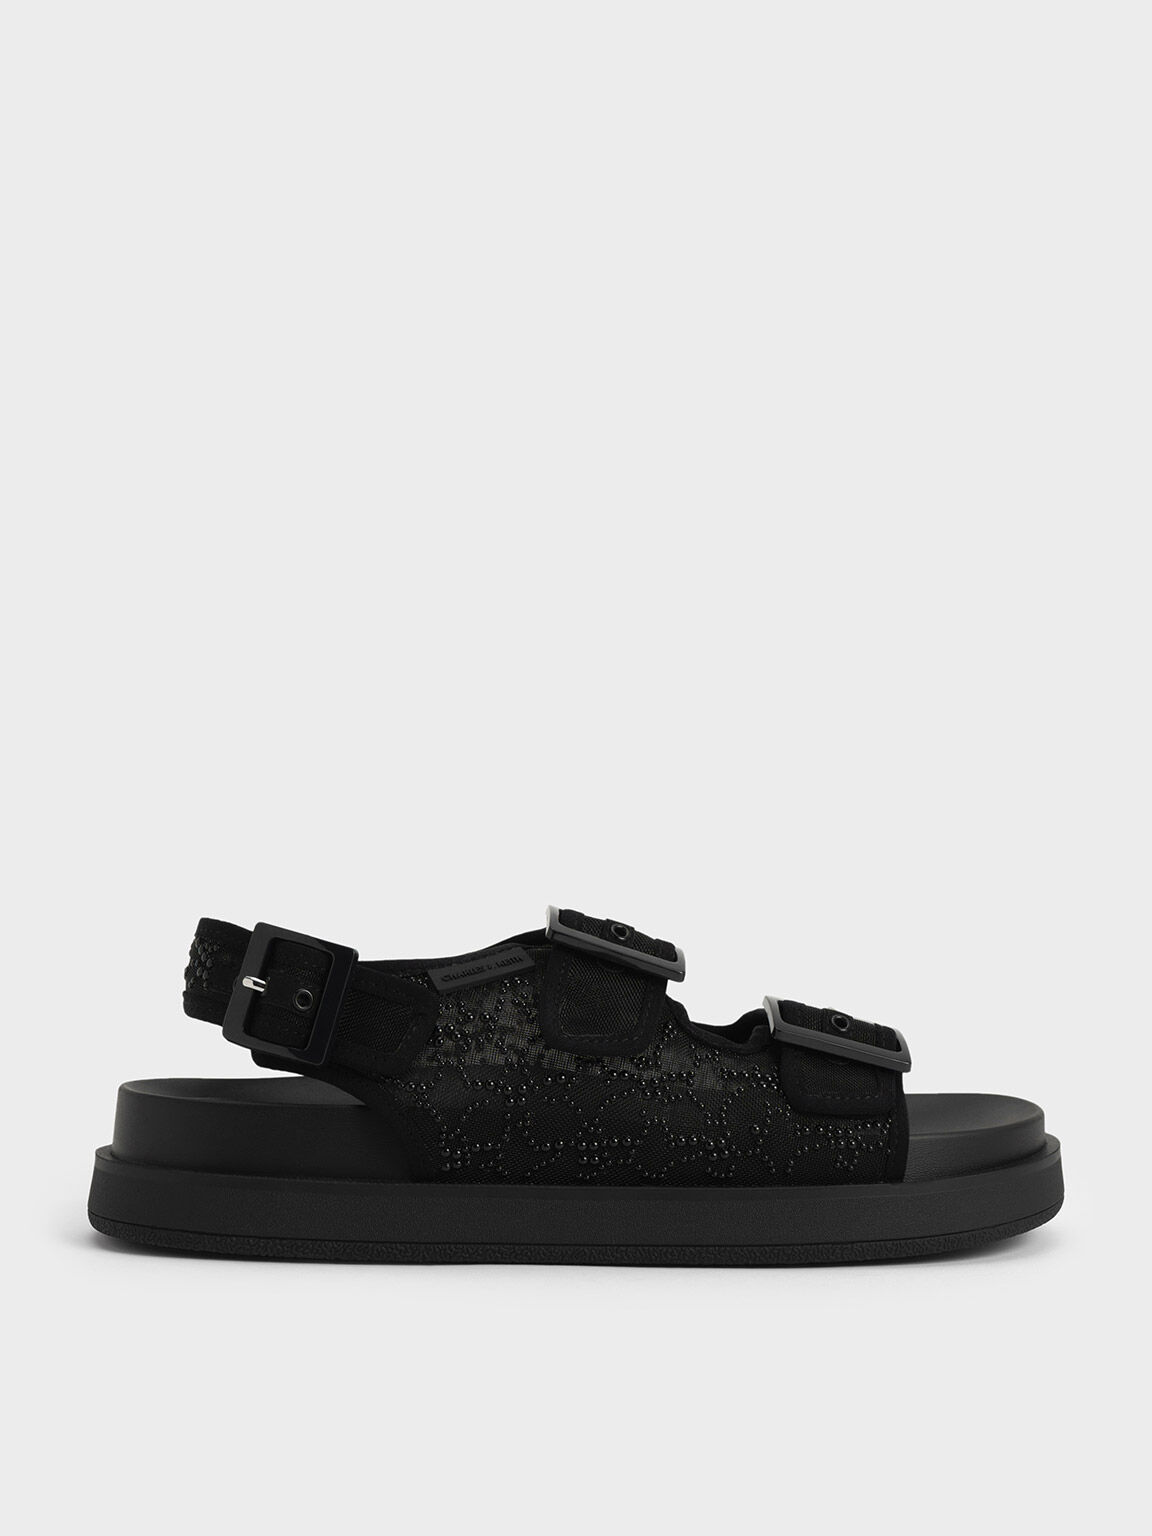 Sandal Flatform Beaded Mesh, Black, hi-res